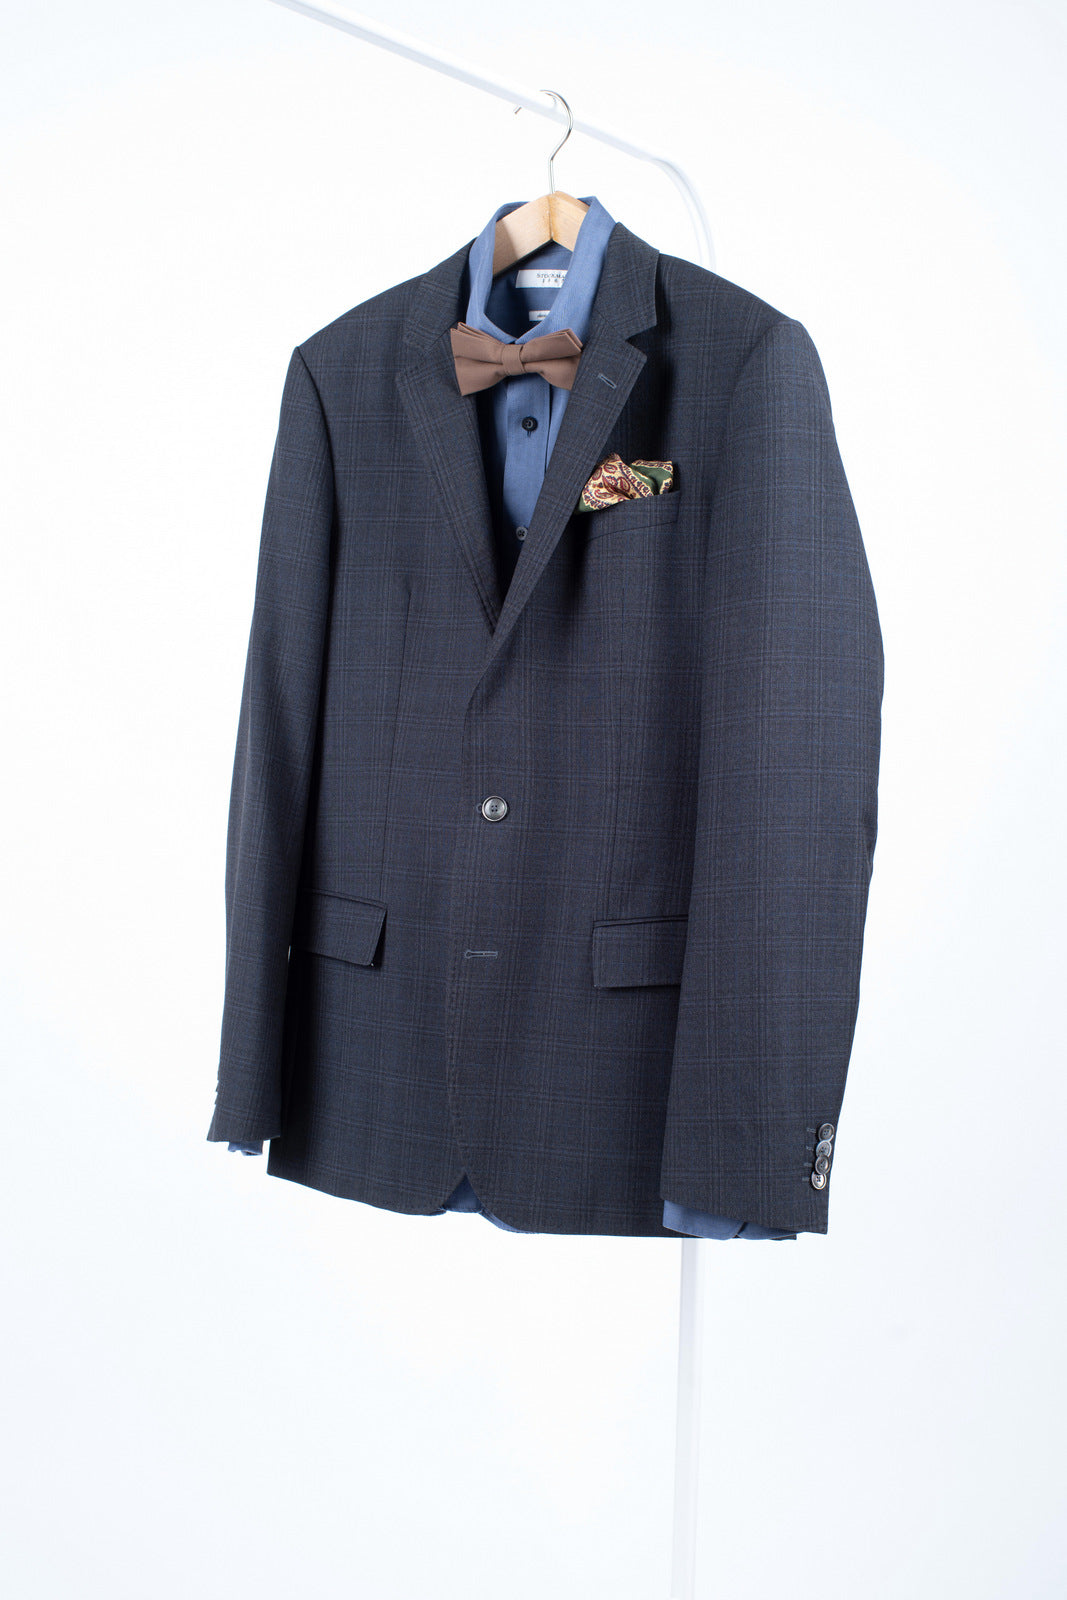 Hugo Boss Gray Plaid Wool Blazer Jacket With Shell Buttons, US 40L, EU 98